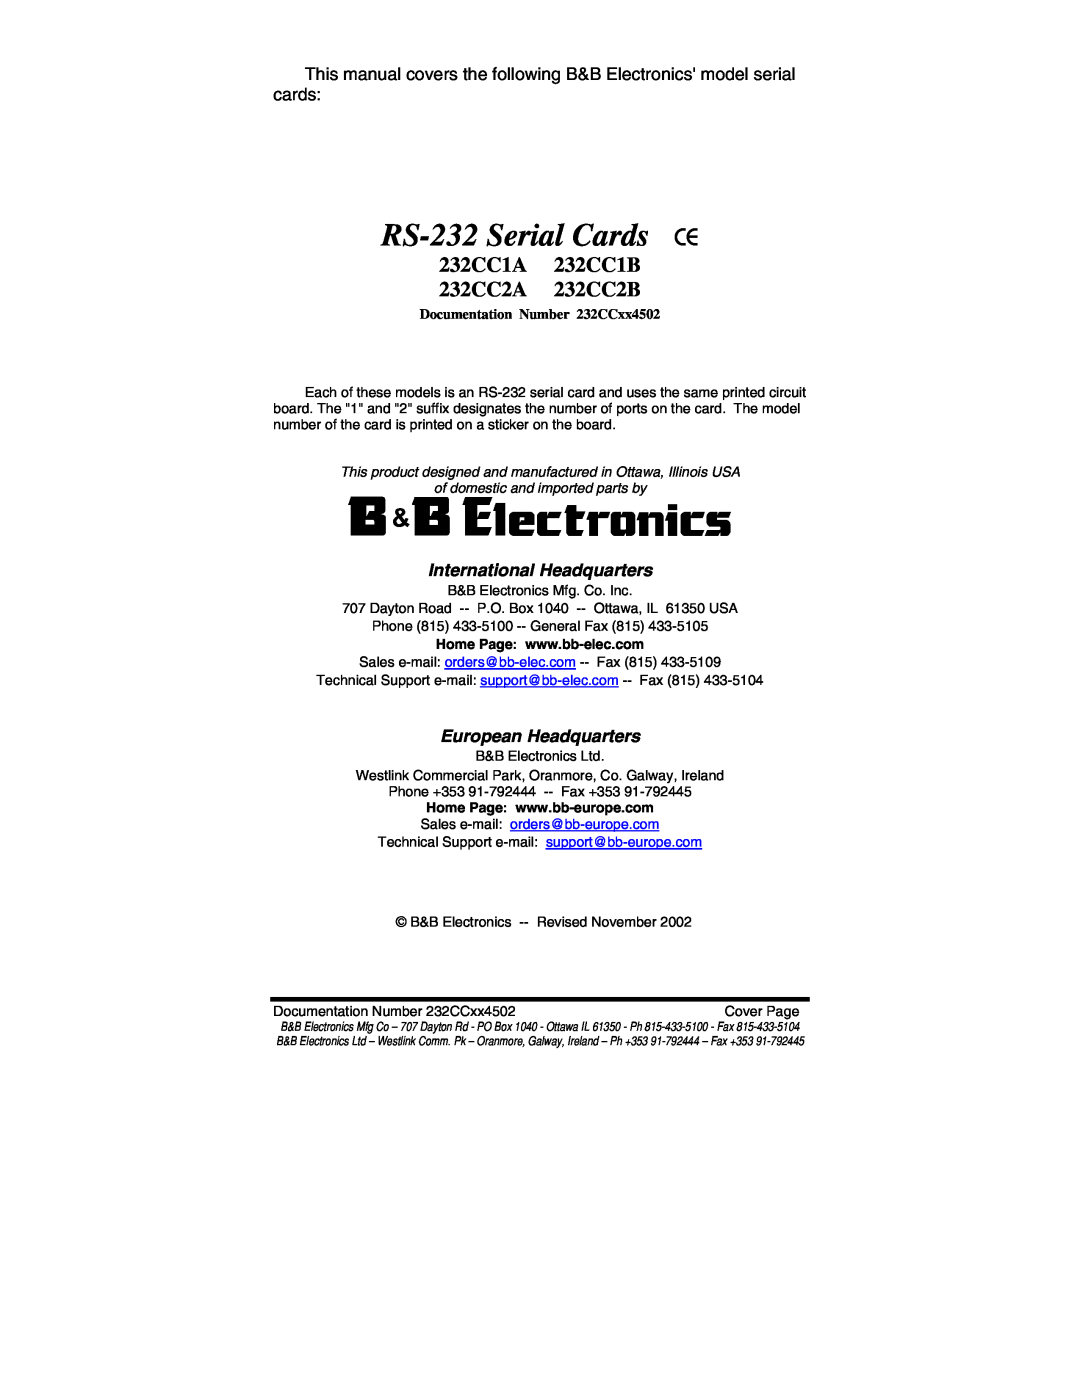 B&B Electronics manual RS-232 Serial Cards CE, 232CC1A 232CC1B 232CC2A 232CC2B, International Headquarters 